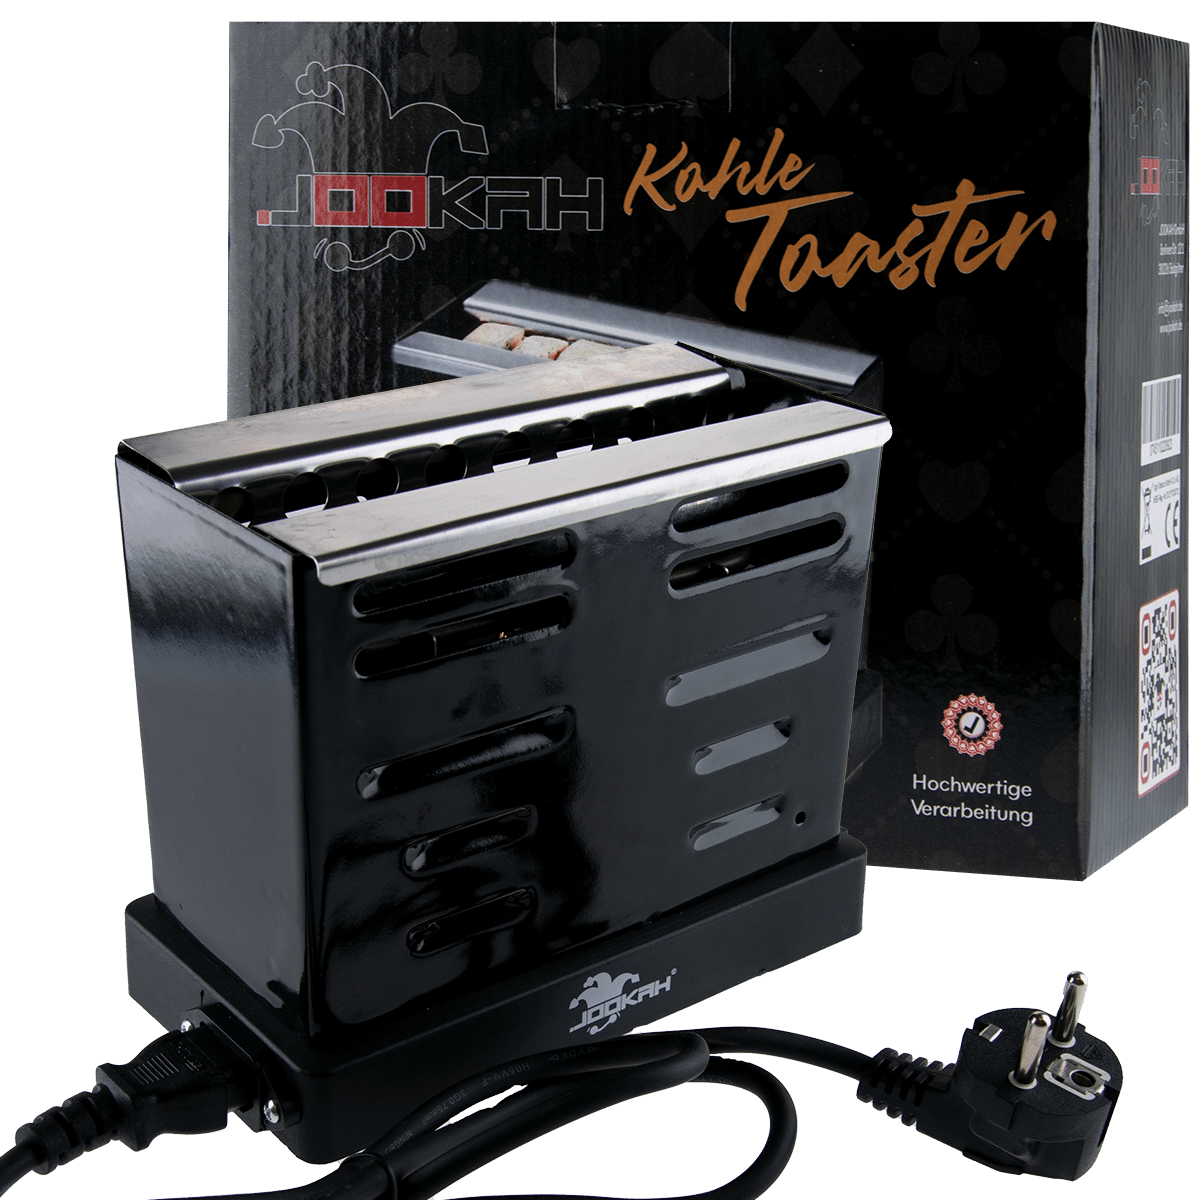 Rozpalarka do węgli Jookah Toaster, 800W